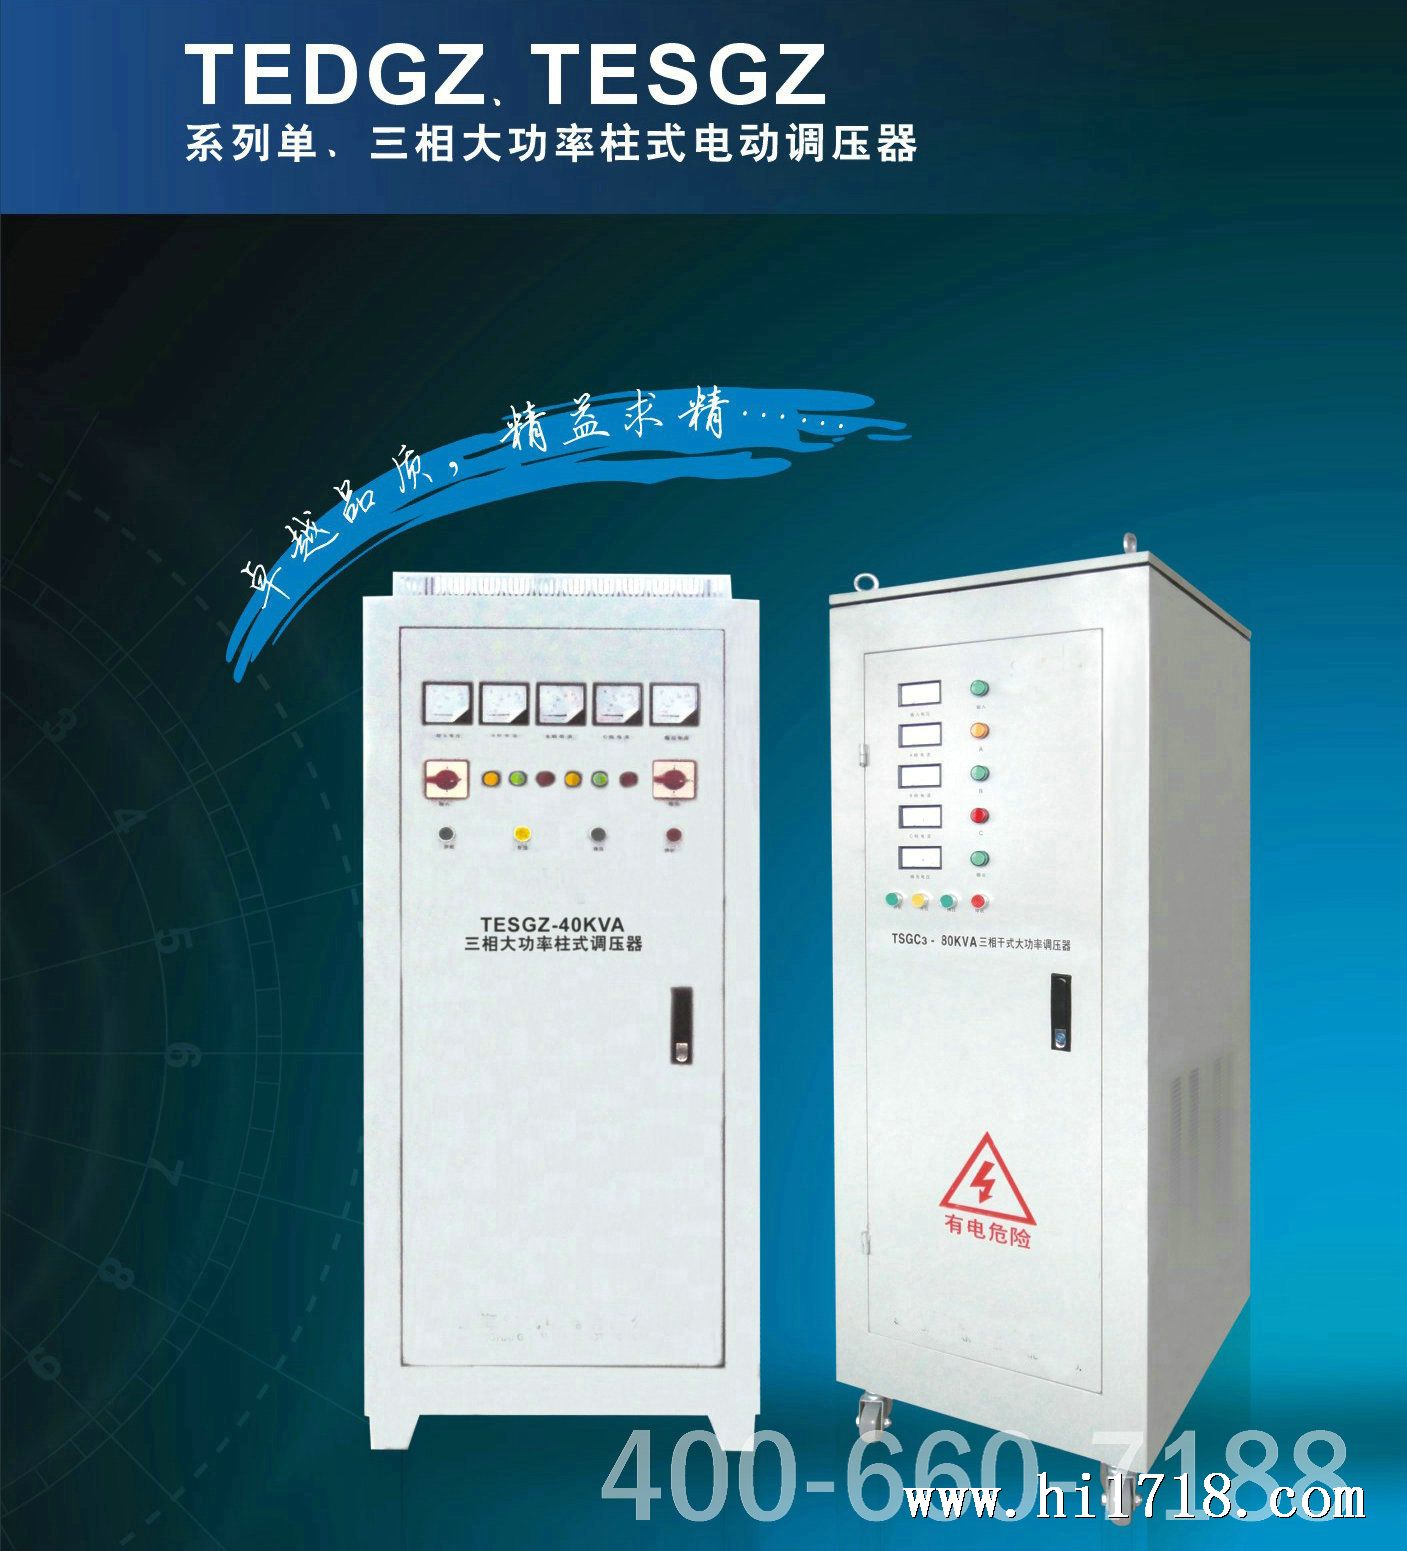 TEDGZ、TESGZ系列单、三相大功率柱式电动调压器